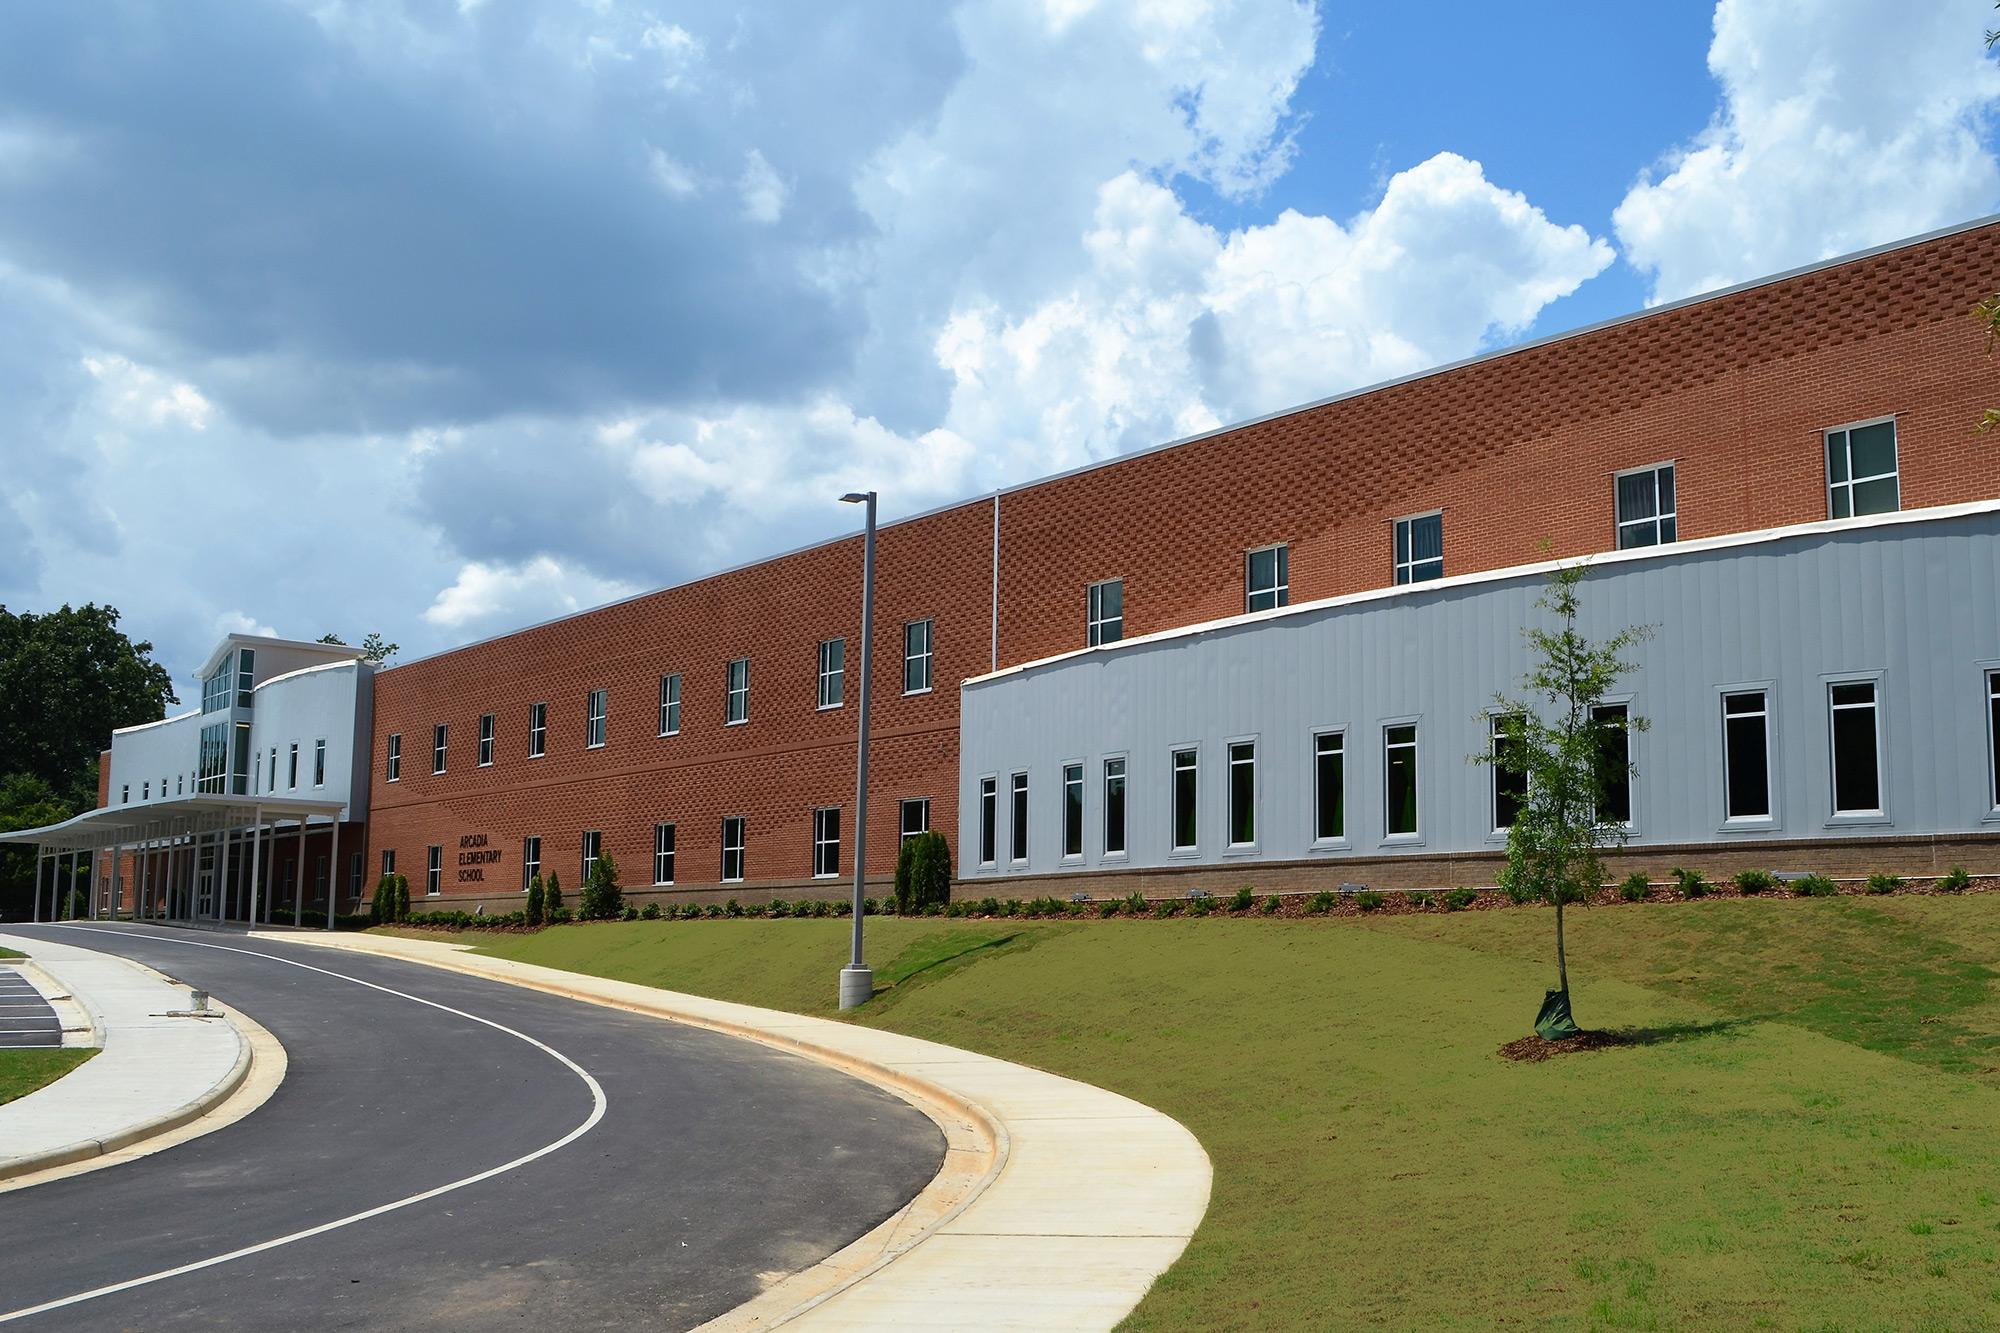 Arcadia Elementary School in Tuscaloosa Alabama